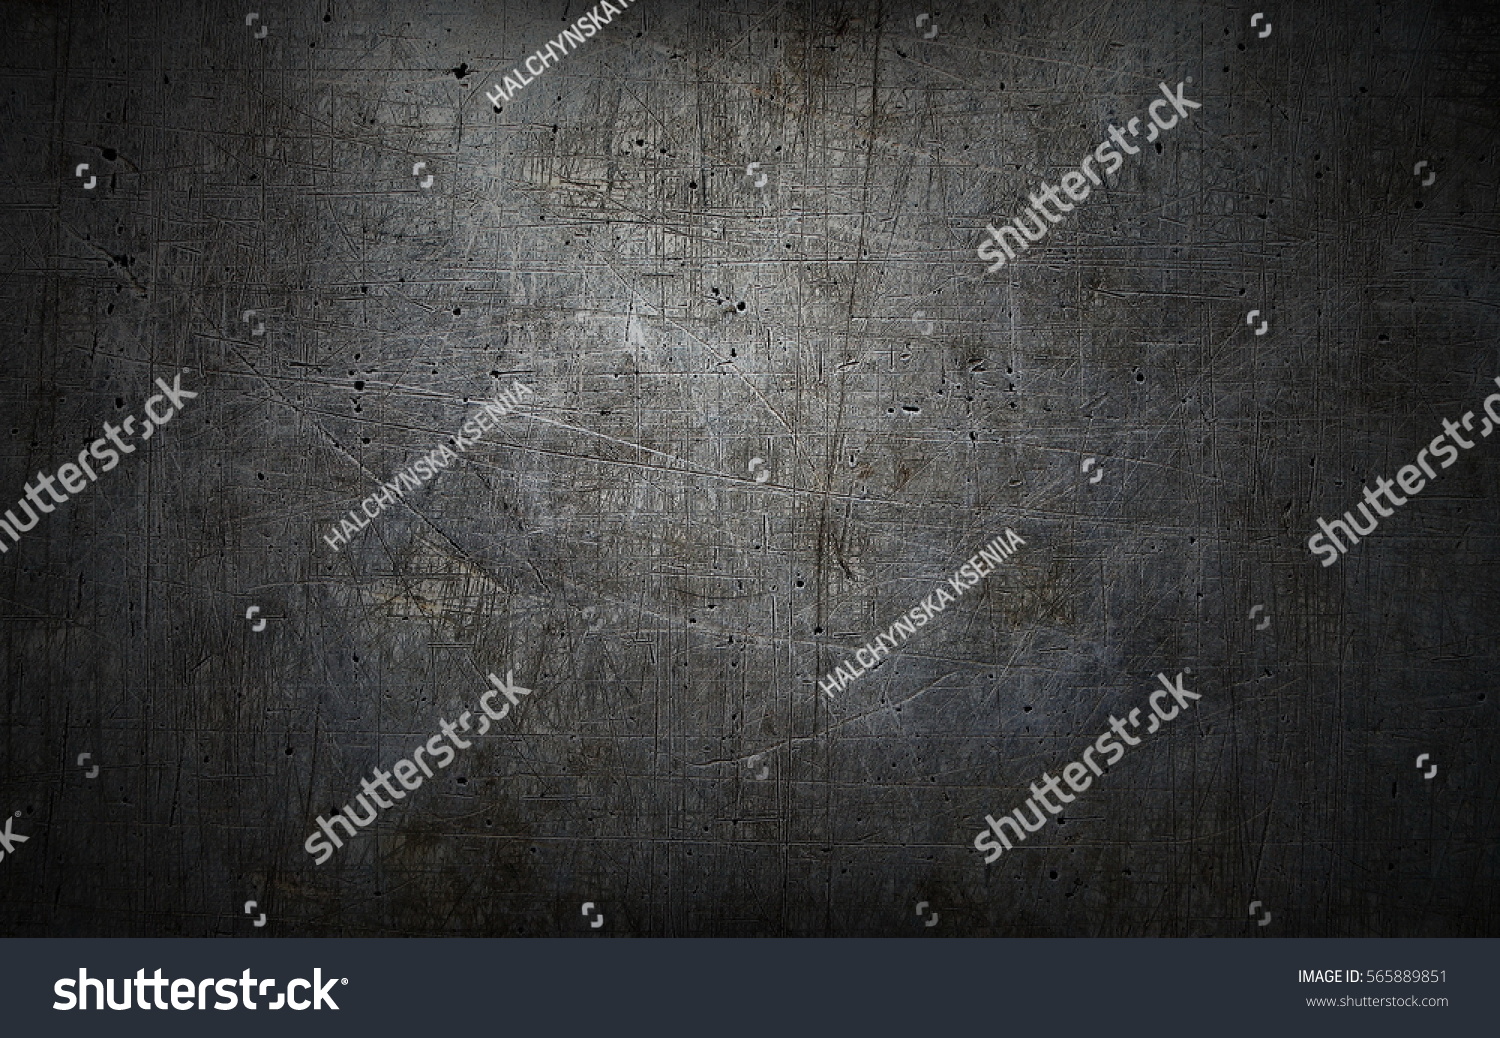 Grey grunge metal textured wall background #565889851